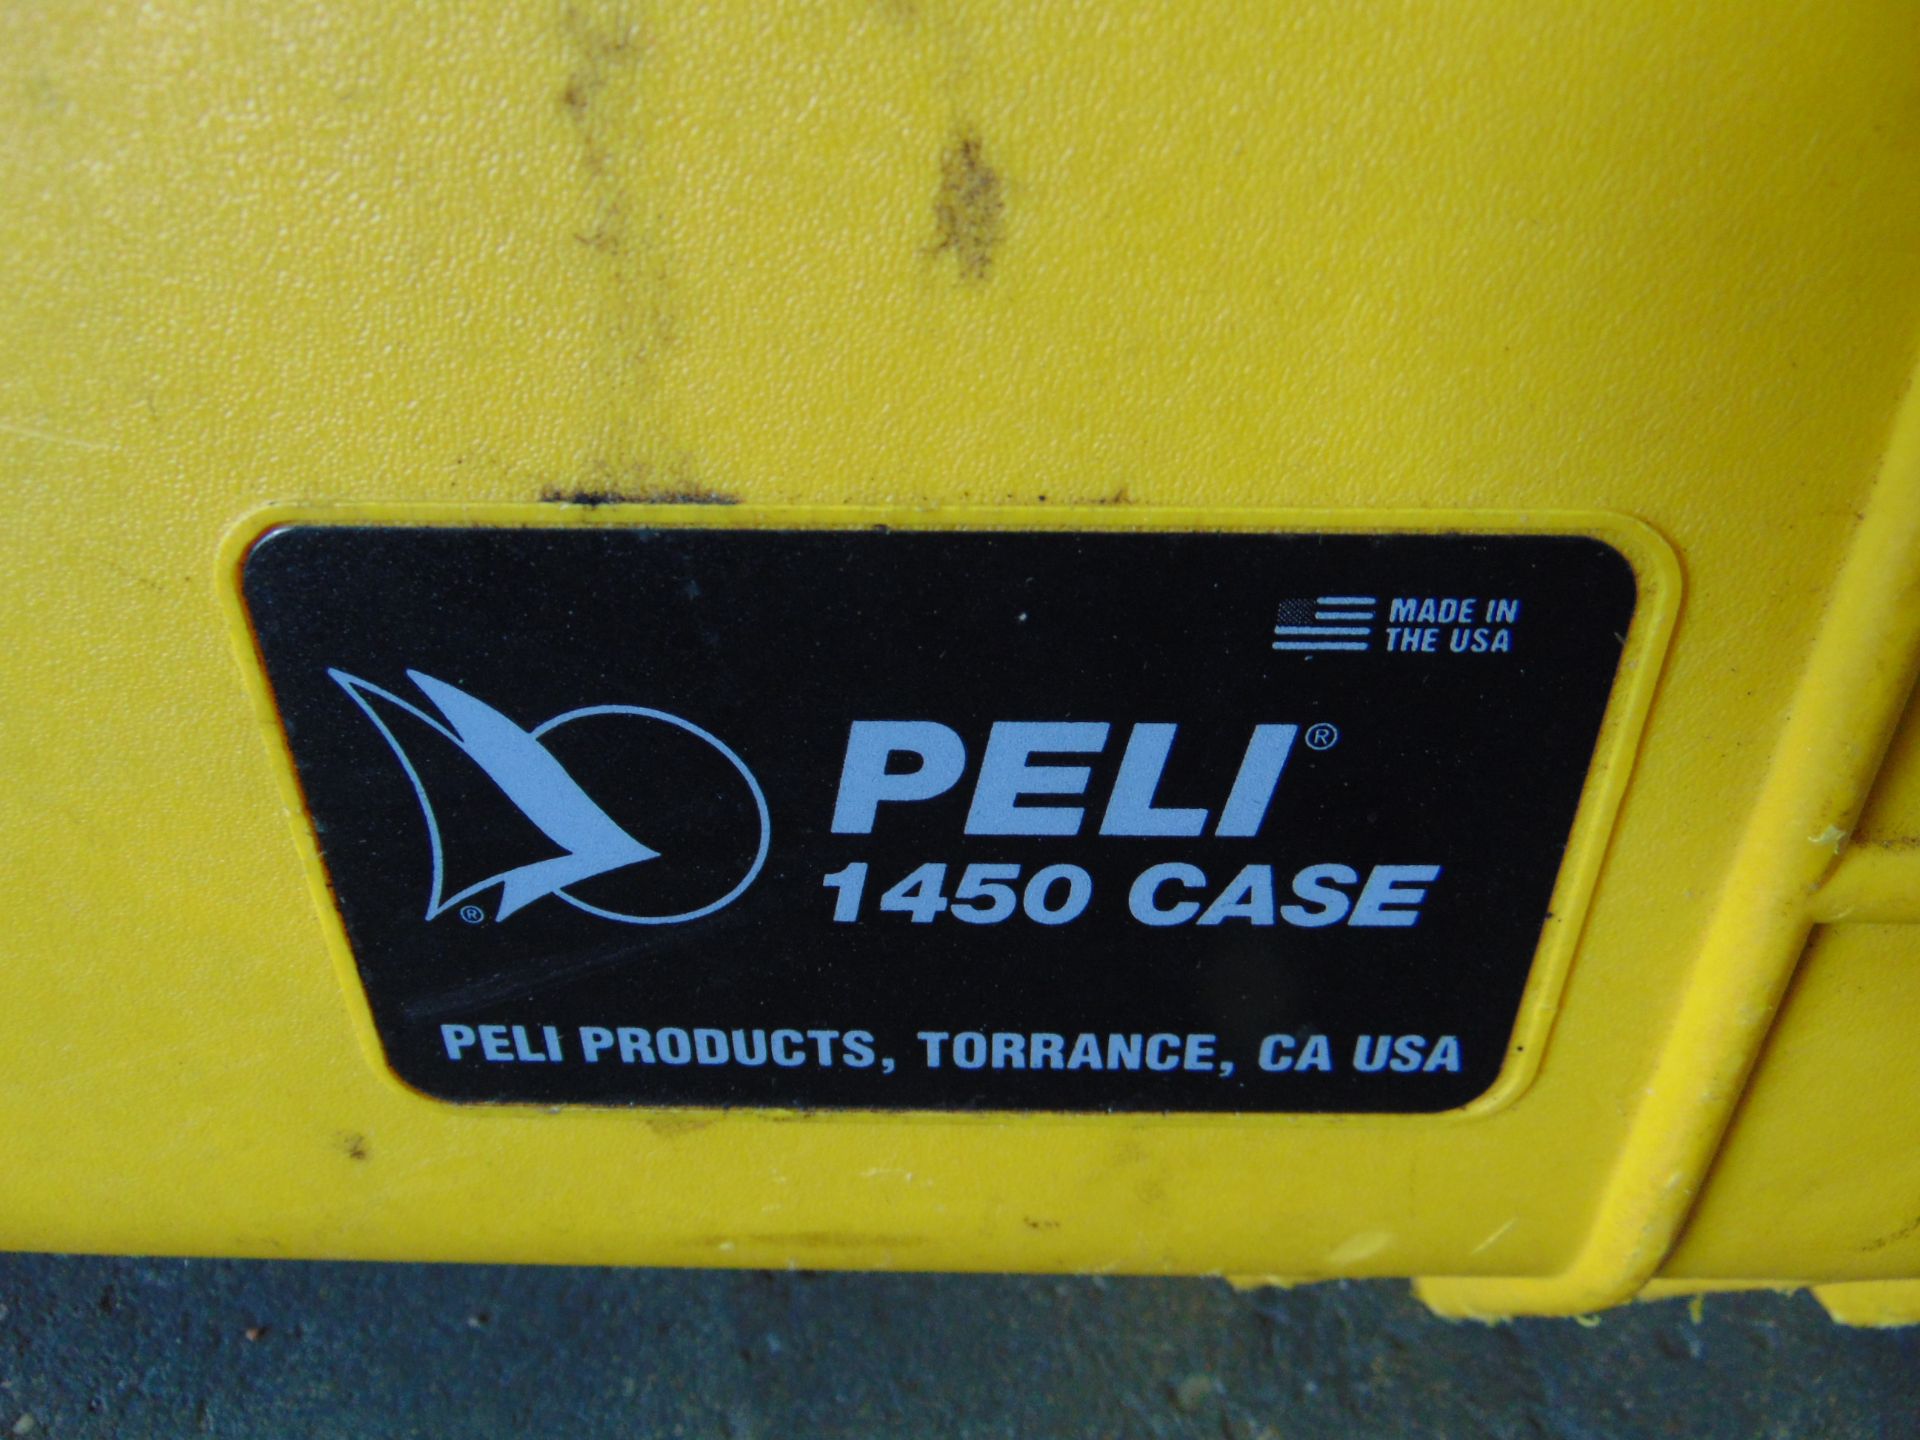 2 x Peli 1450 Hard Cases - Image 4 of 4